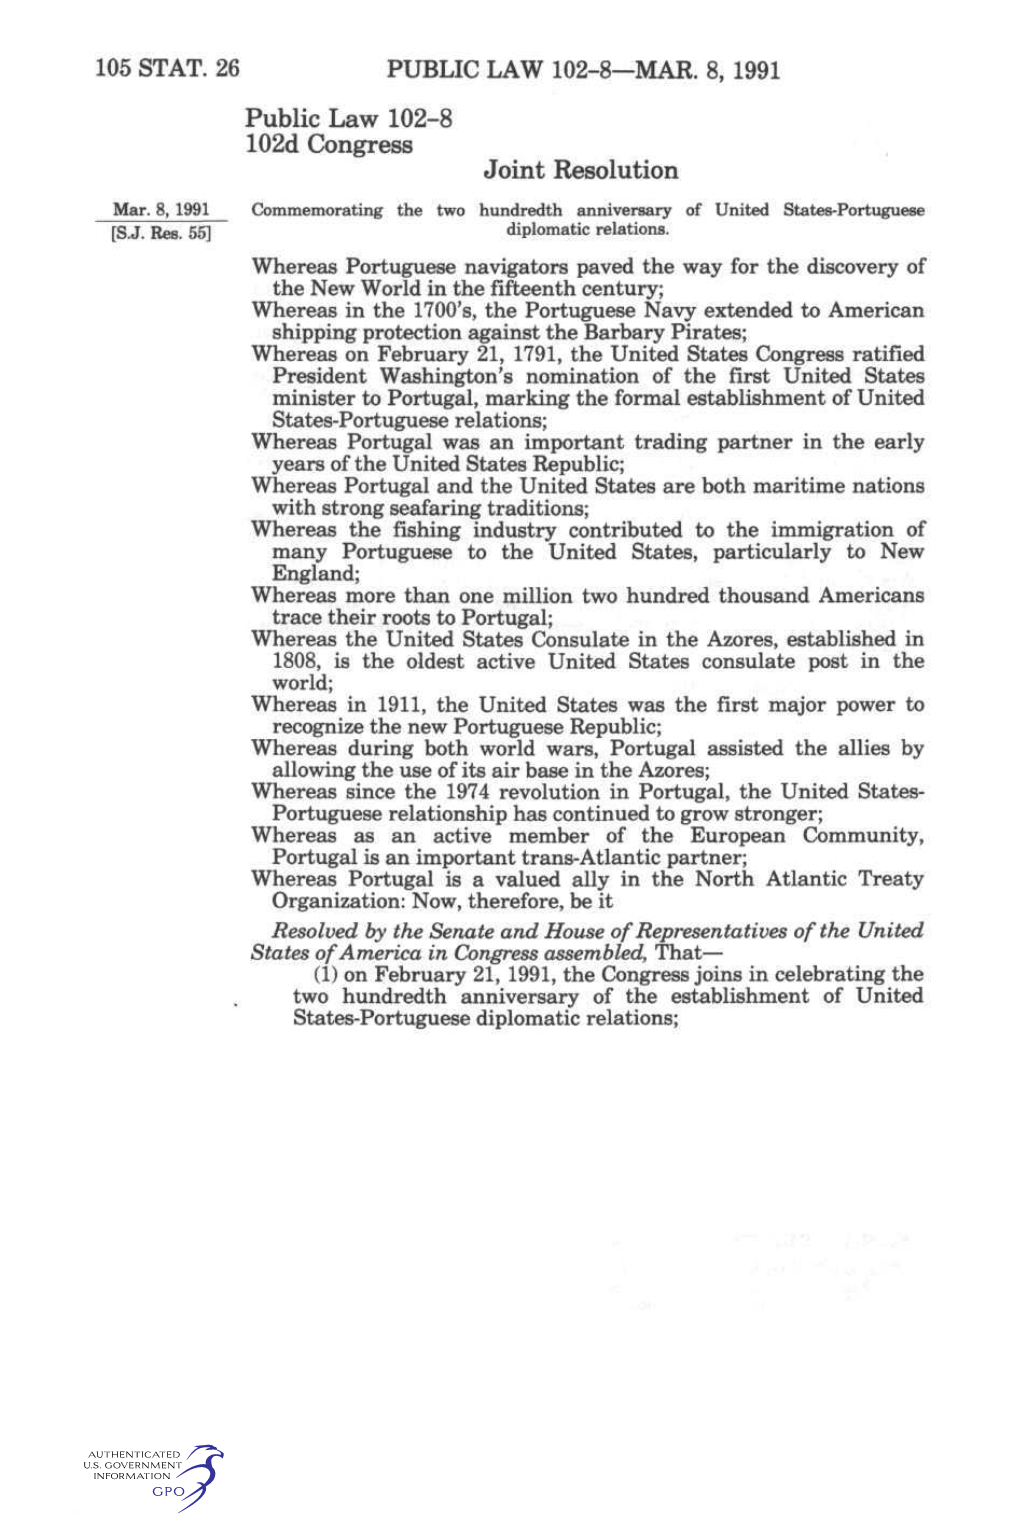 105 STAT. 26 PUBLIC LAW 102-8—MAR. 8, 1991 Public Law 102-8 102D Congress Joint Resolution Mar